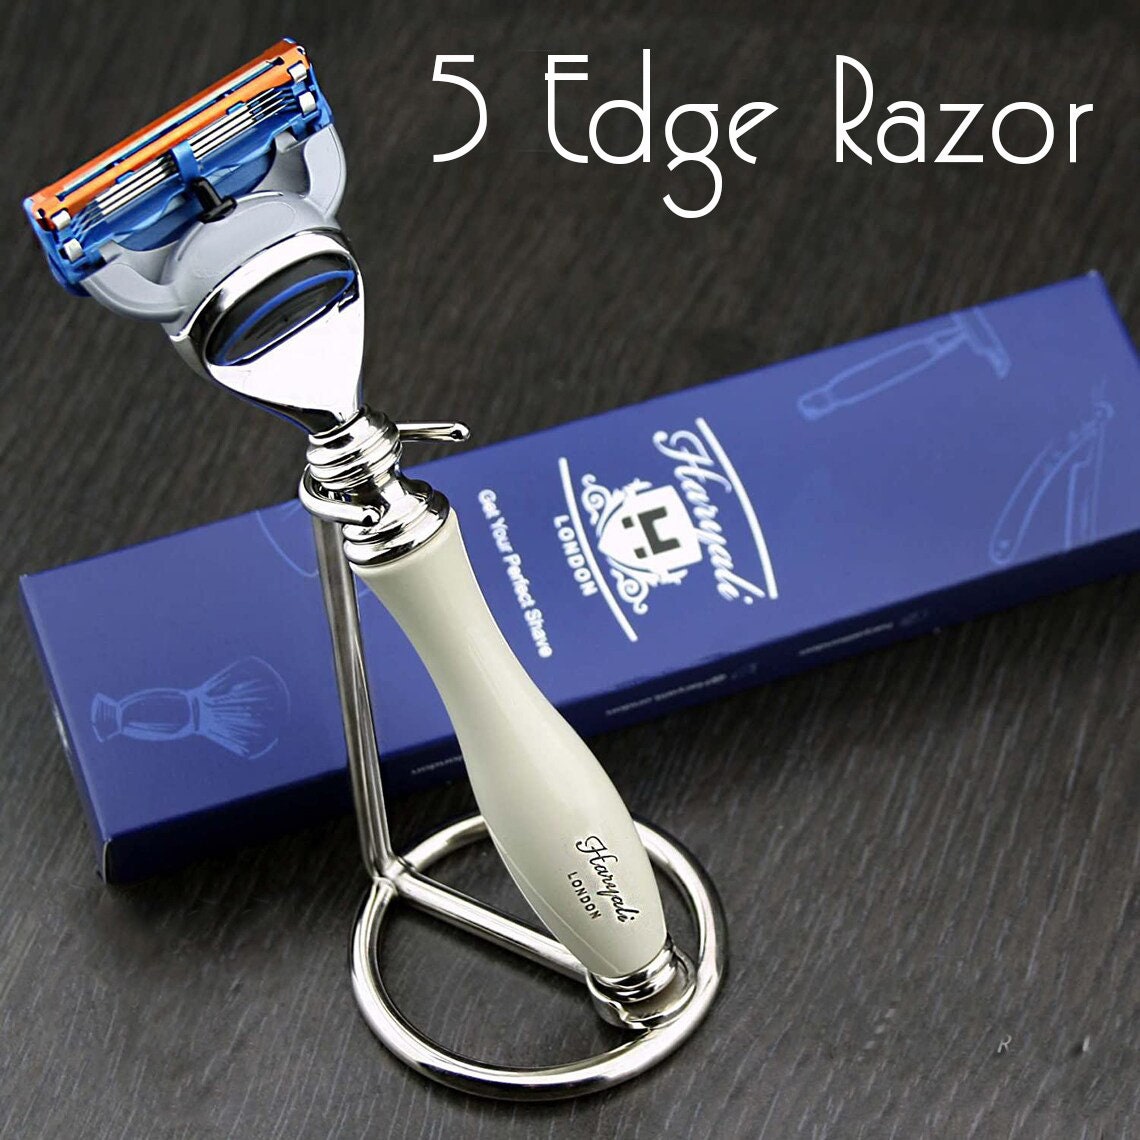 Razor sharpener - luxury wooden Gentleman's Choice razor blade sharpener